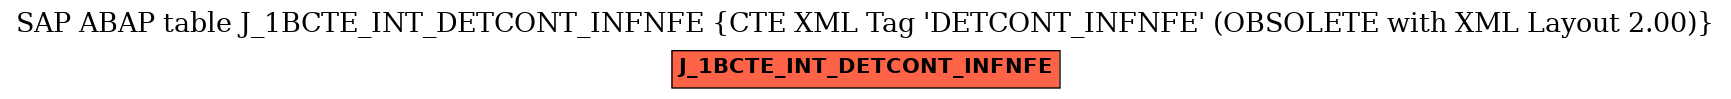 E-R Diagram for table J_1BCTE_INT_DETCONT_INFNFE (CTE XML Tag 'DETCONT_INFNFE' (OBSOLETE with XML Layout 2.00))